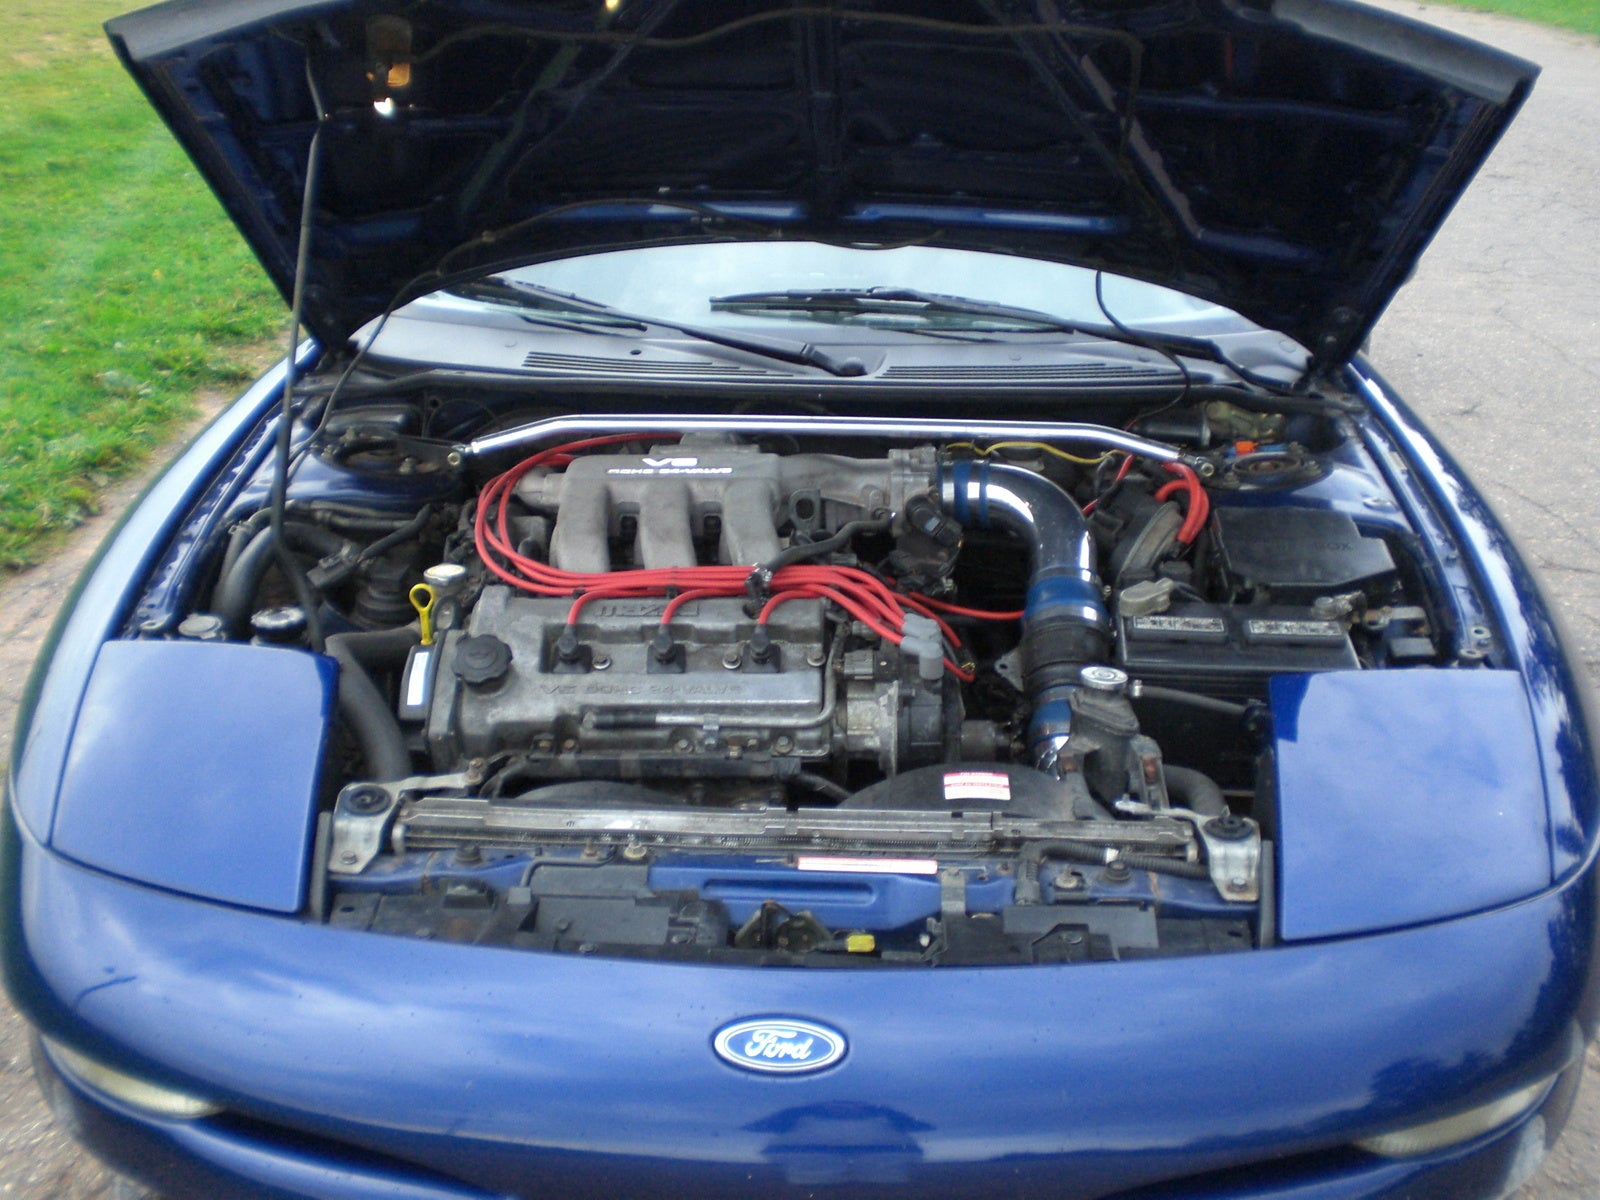 1994 Ford probe engine swap